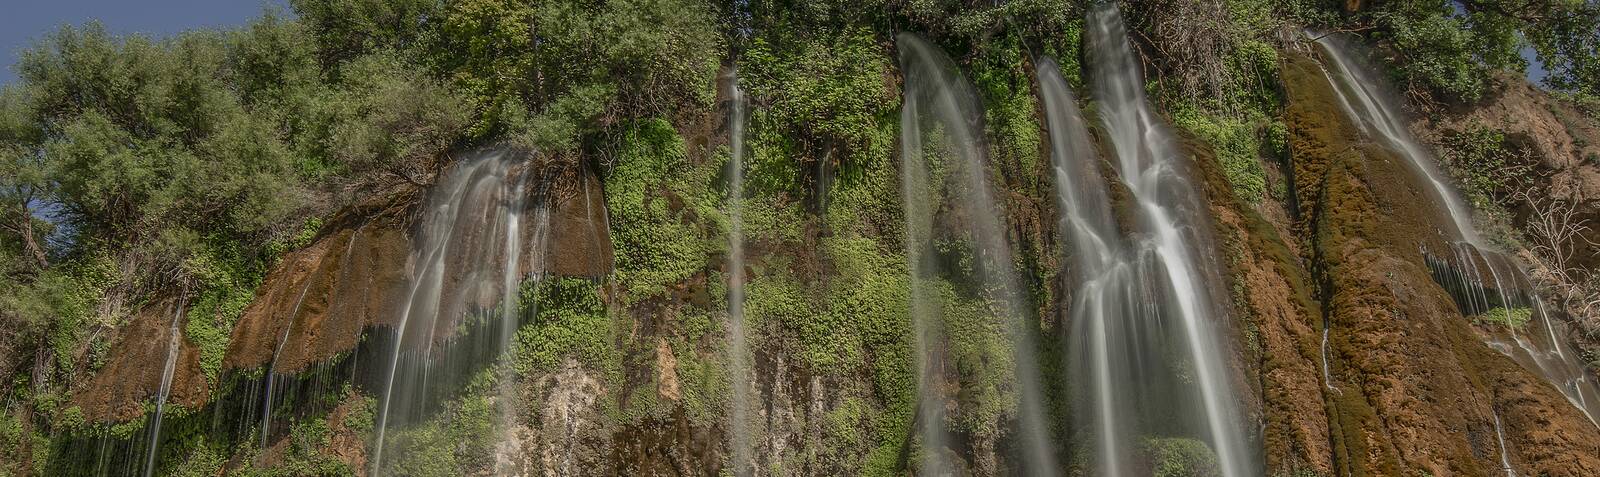 Bisheh waterfall